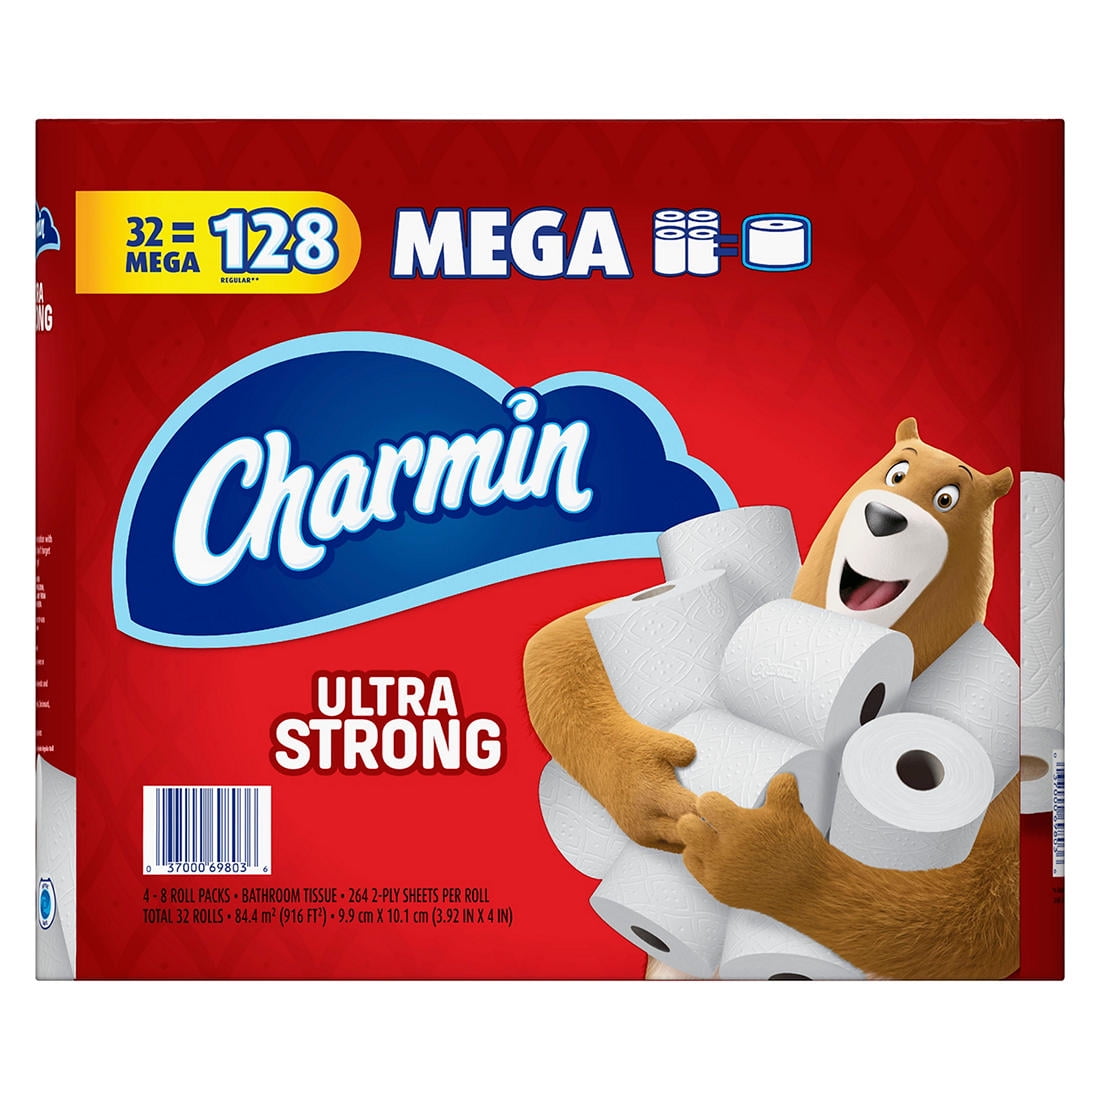 Charmin Ultra Strong Mega Roll Toilet Paper, 32 ct. - Walmart.com